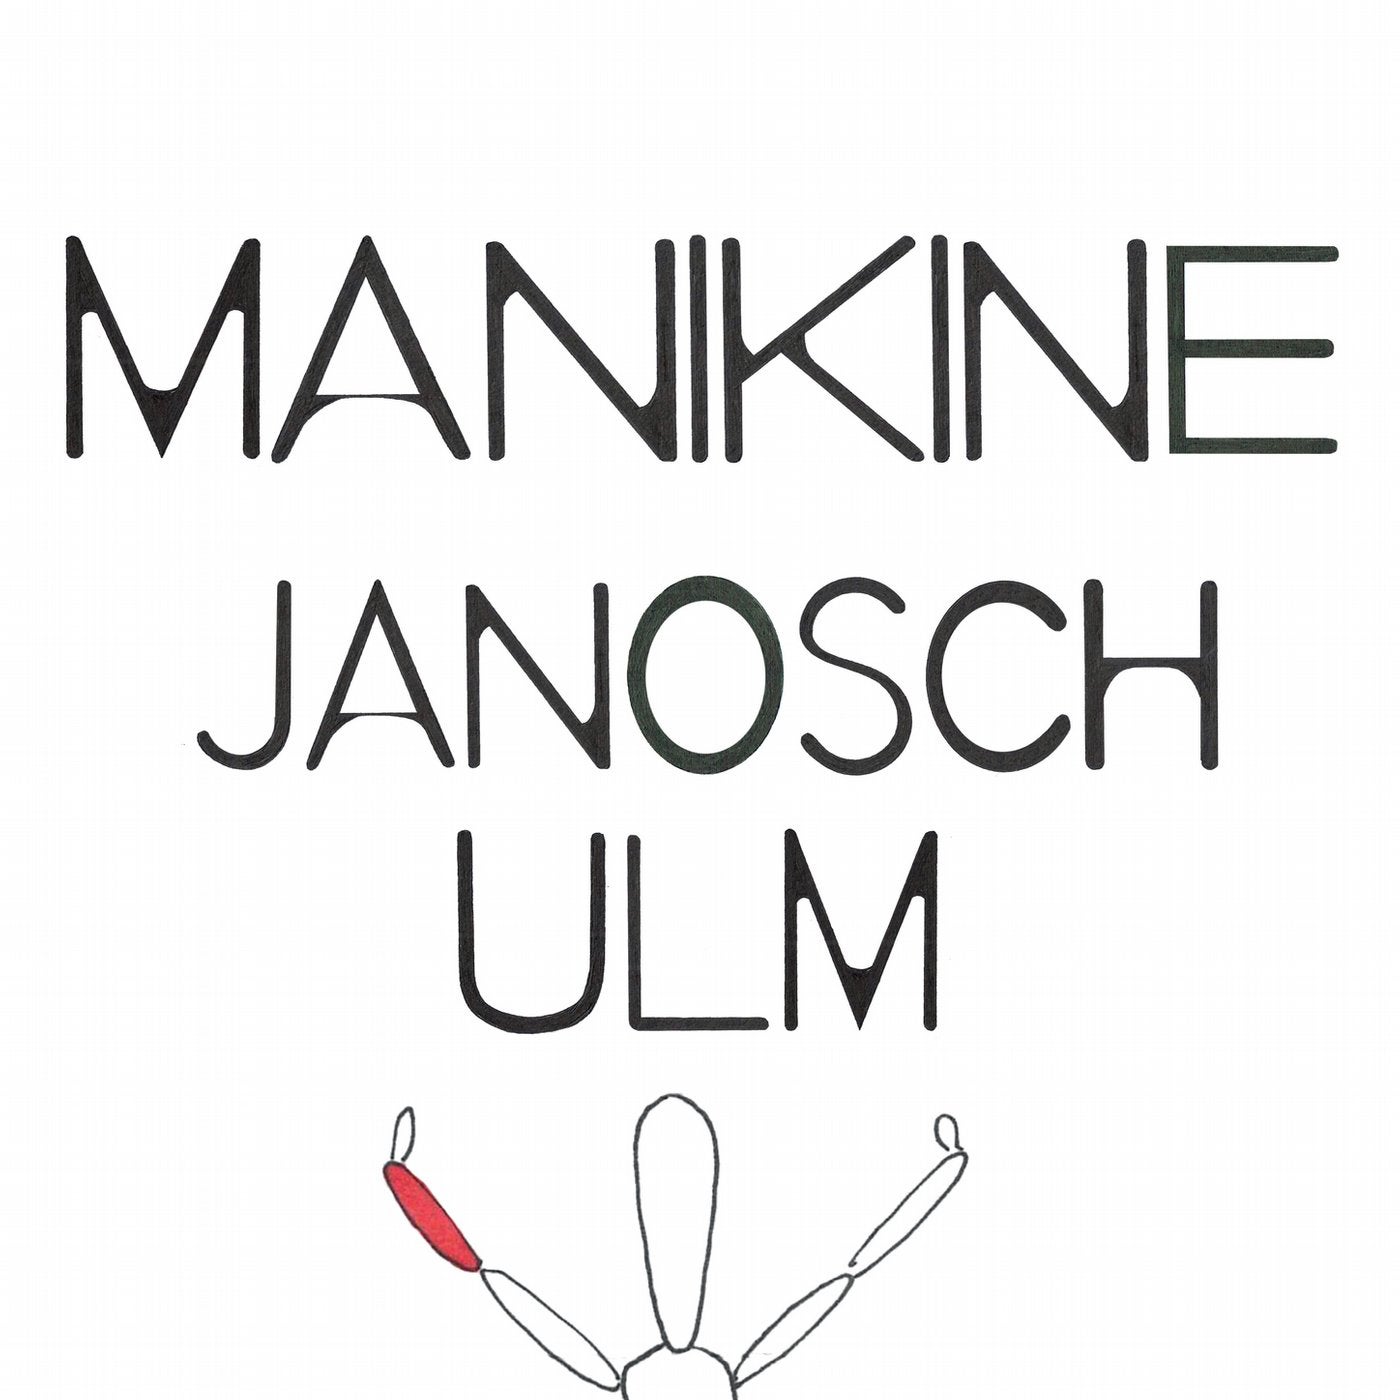 Manikine